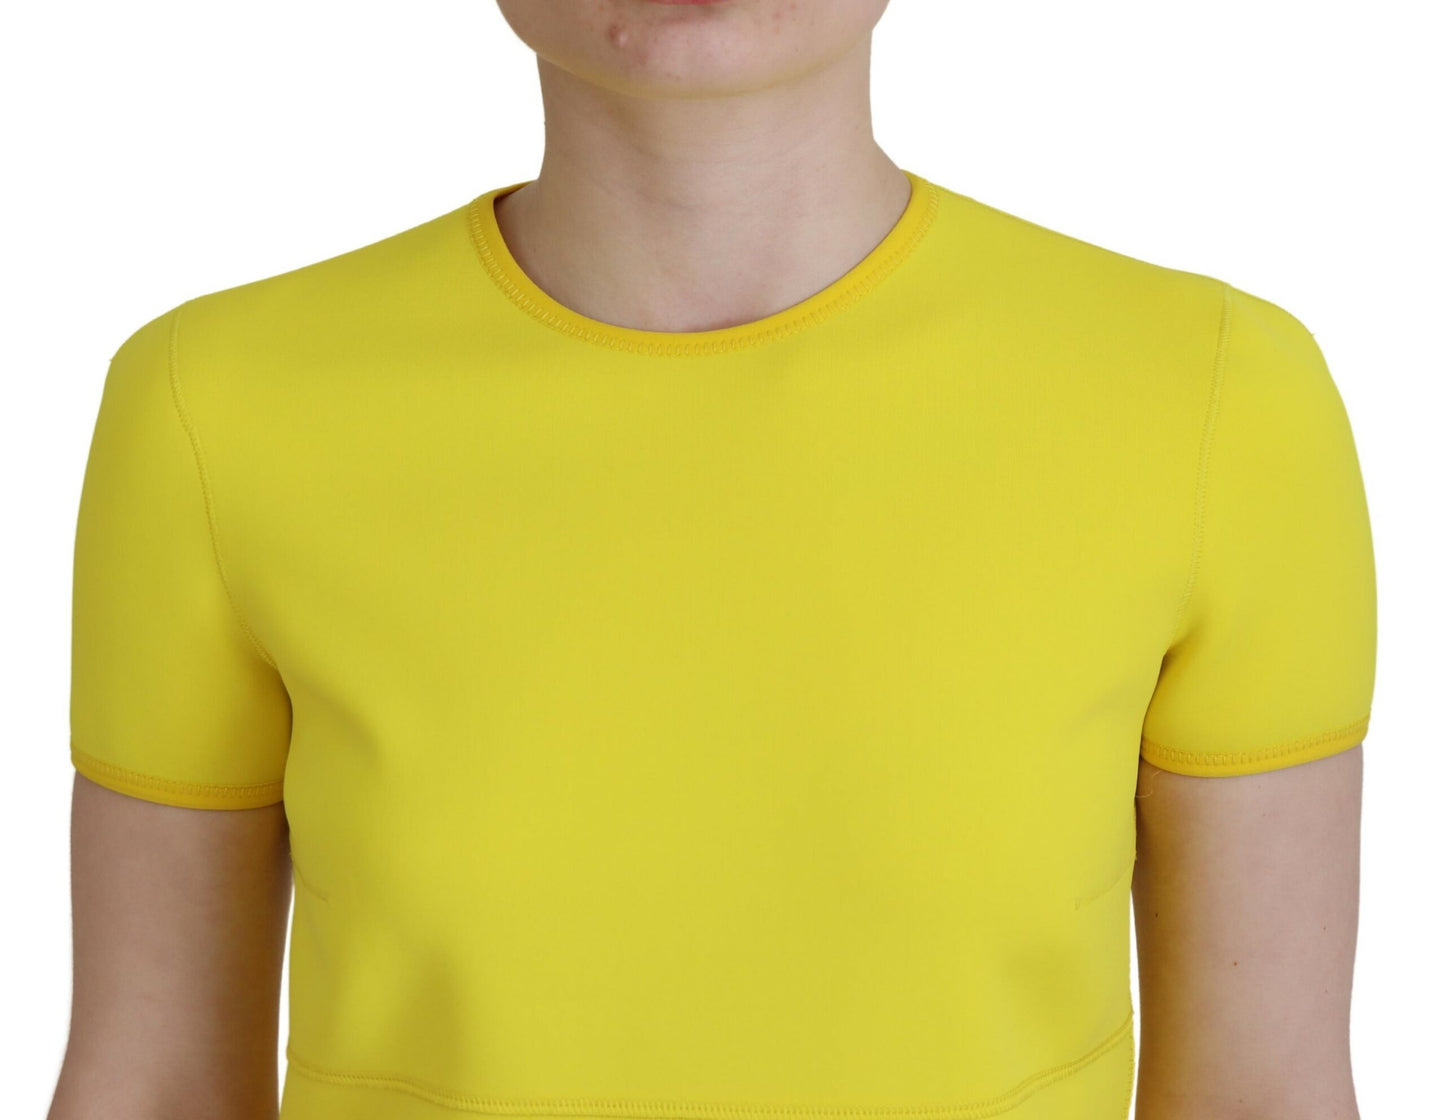 Yellow Nylon Short Sleeves Round Neck Mini Dress